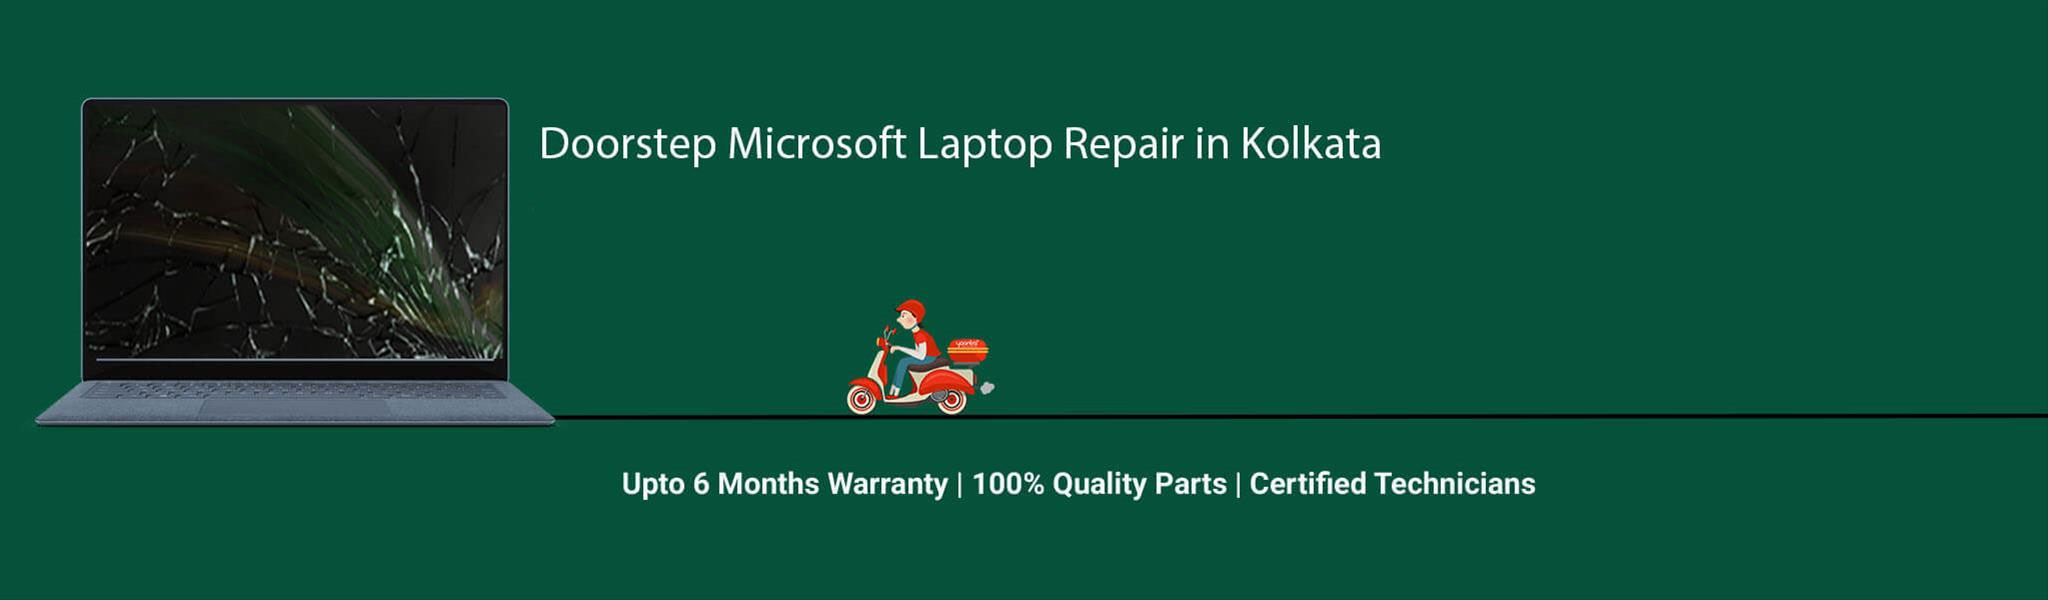 Microsoft-laptop-banner-kolkata.jpg